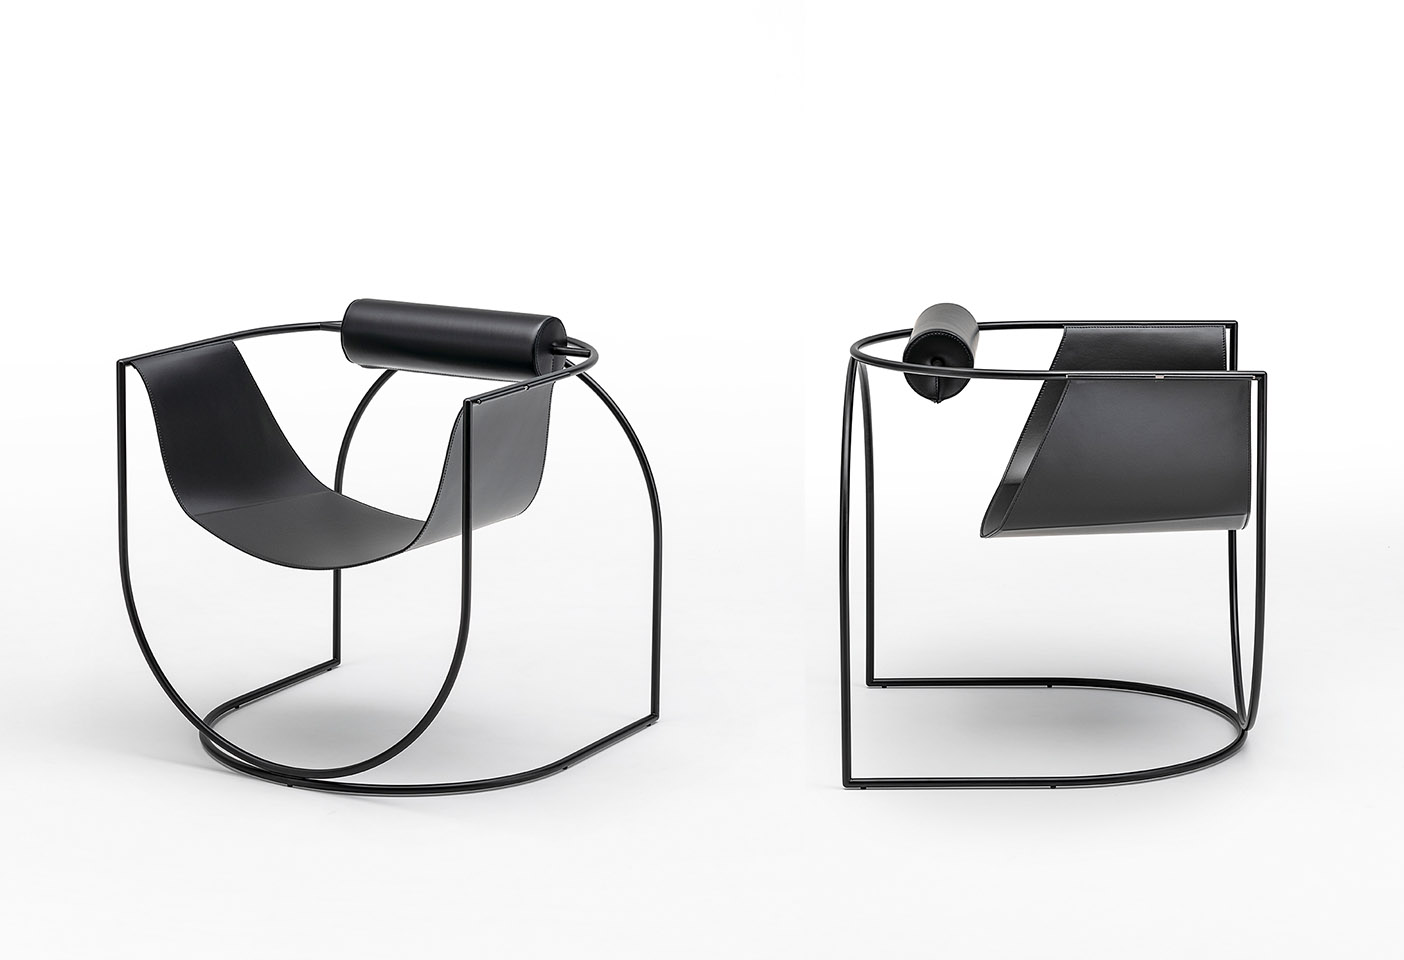 The sculptural Lemni Chair designed by Marco Levit for Liviing Divani. Photo c/o Living Divani. 